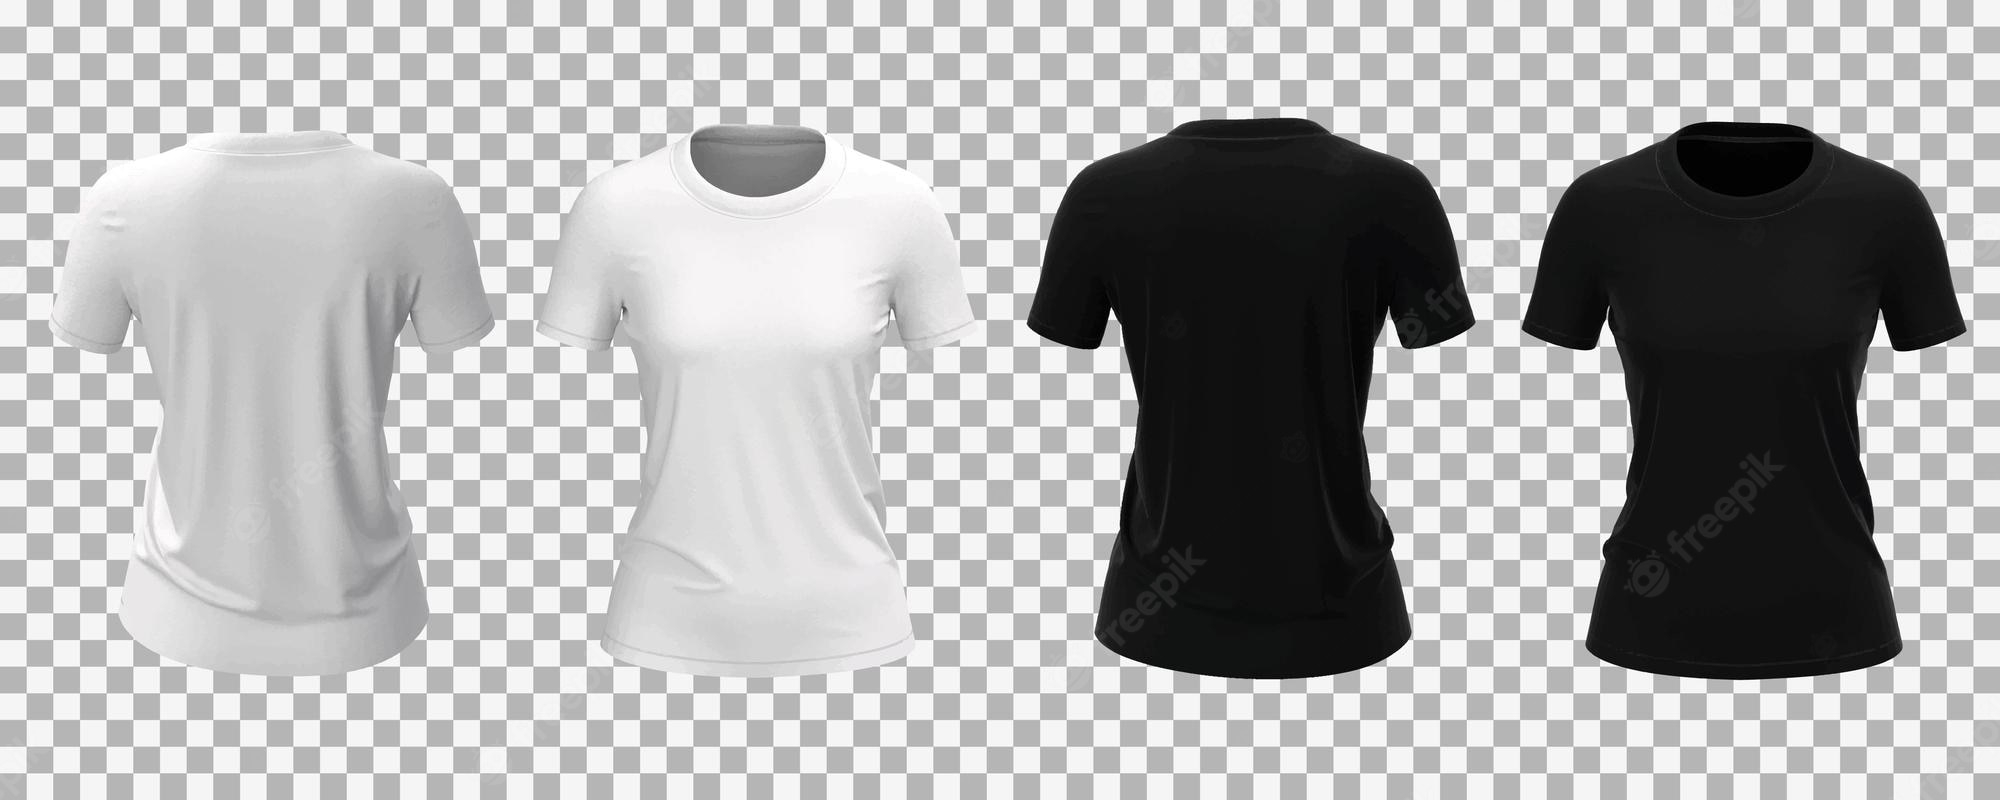 Plain t shirt Vectors & Illustrations for Free Download  Freepik Inside Blank Tshirt Template Pdf